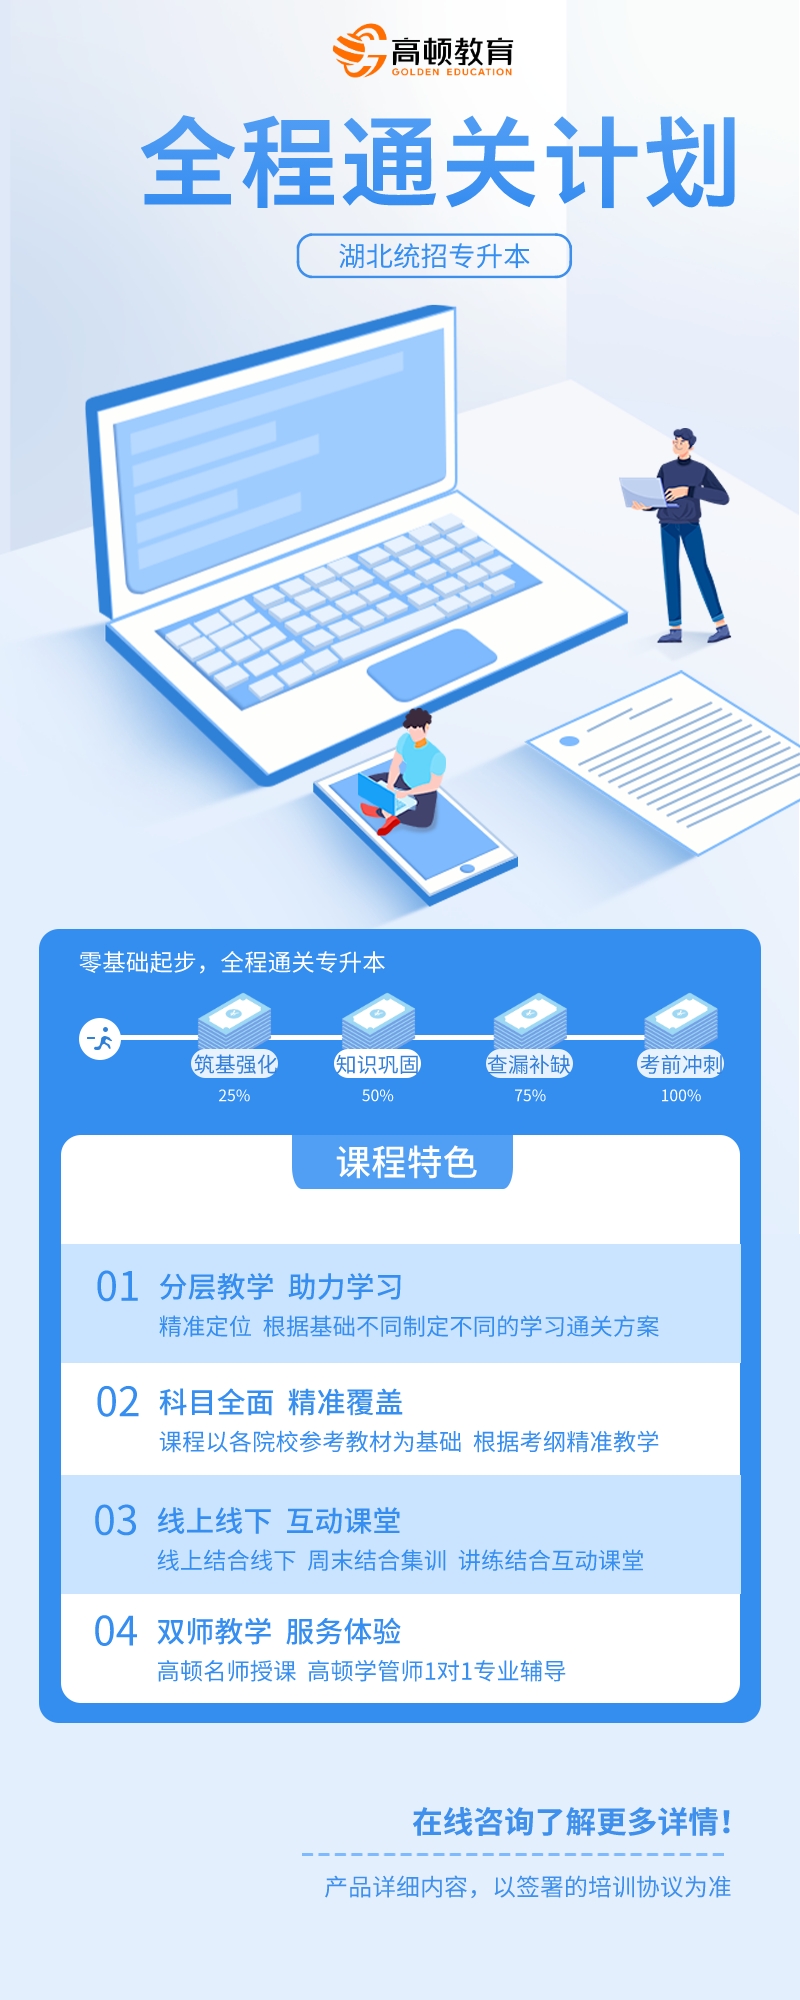 https://simg01.gaodunwangxiao.com/uploadfiles/product-center/202304/26/143cf_20230426162348.jpeg